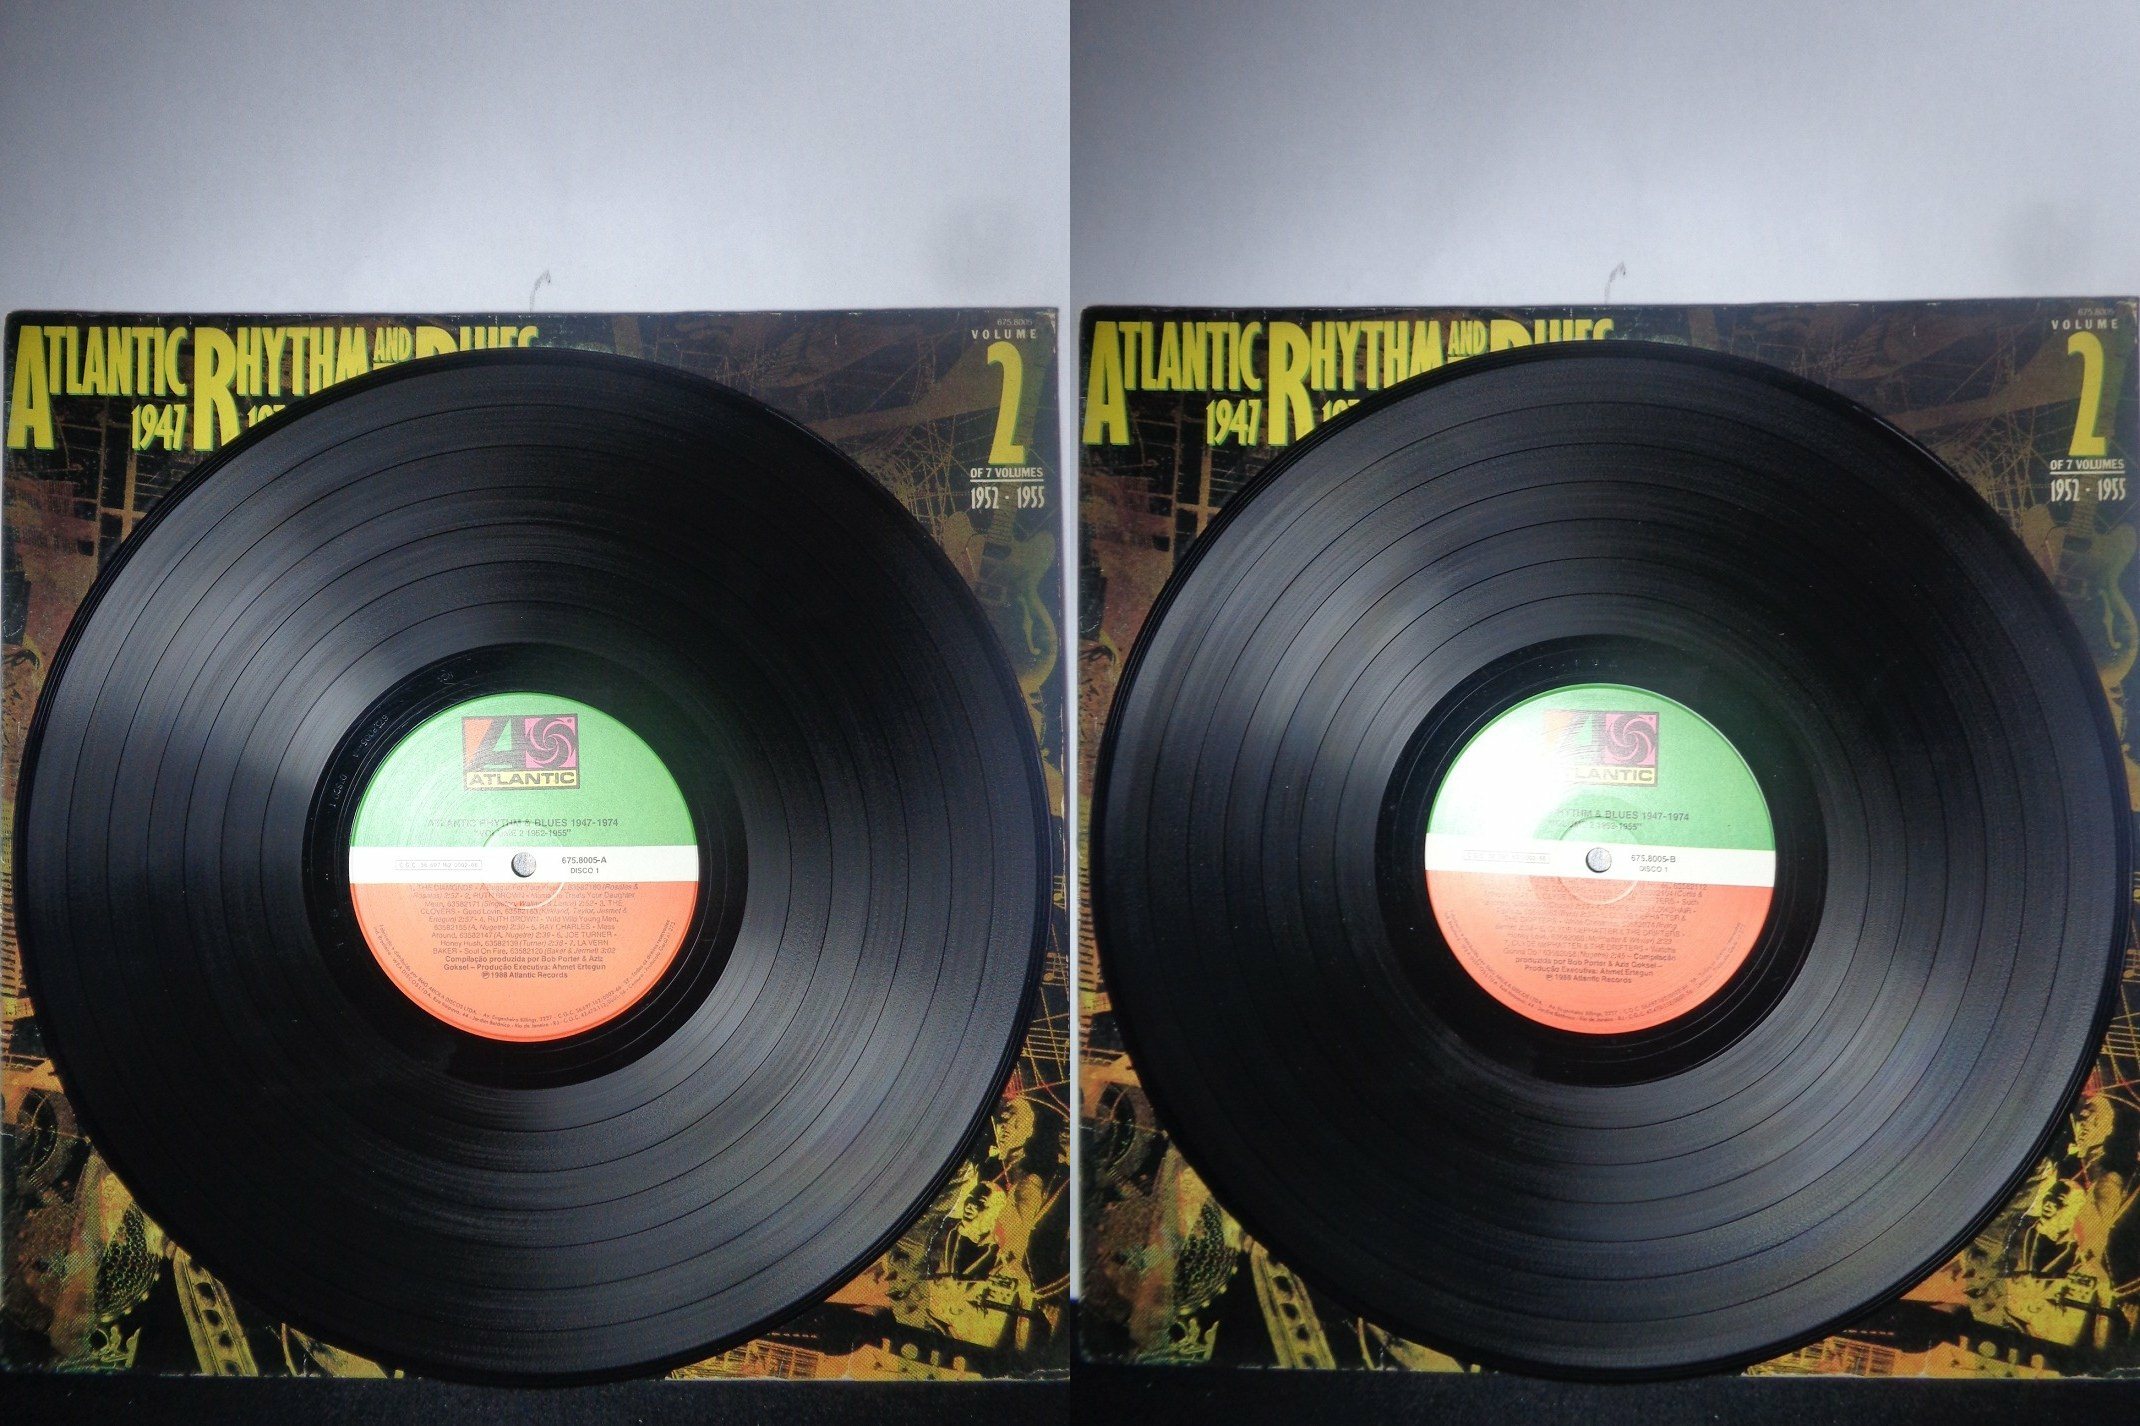 Vinil - Atlantic Rhythm and Blues 1947-1974 - Volume 2 1952-1955 (Duplo)